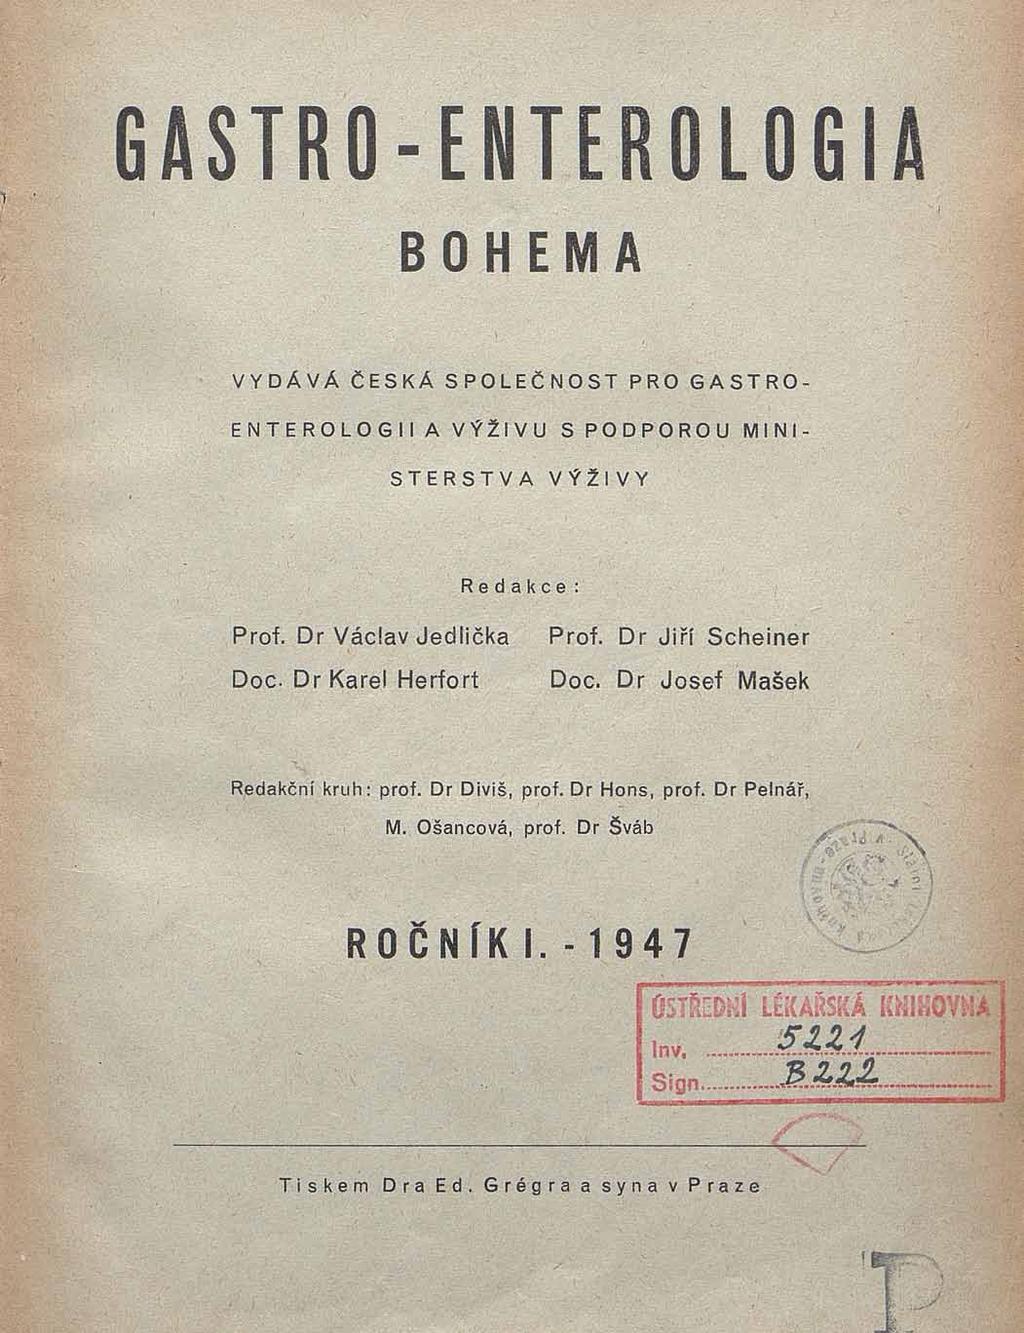 Obálka časopisu Gastro-enterologia Bohema z roku 1947.